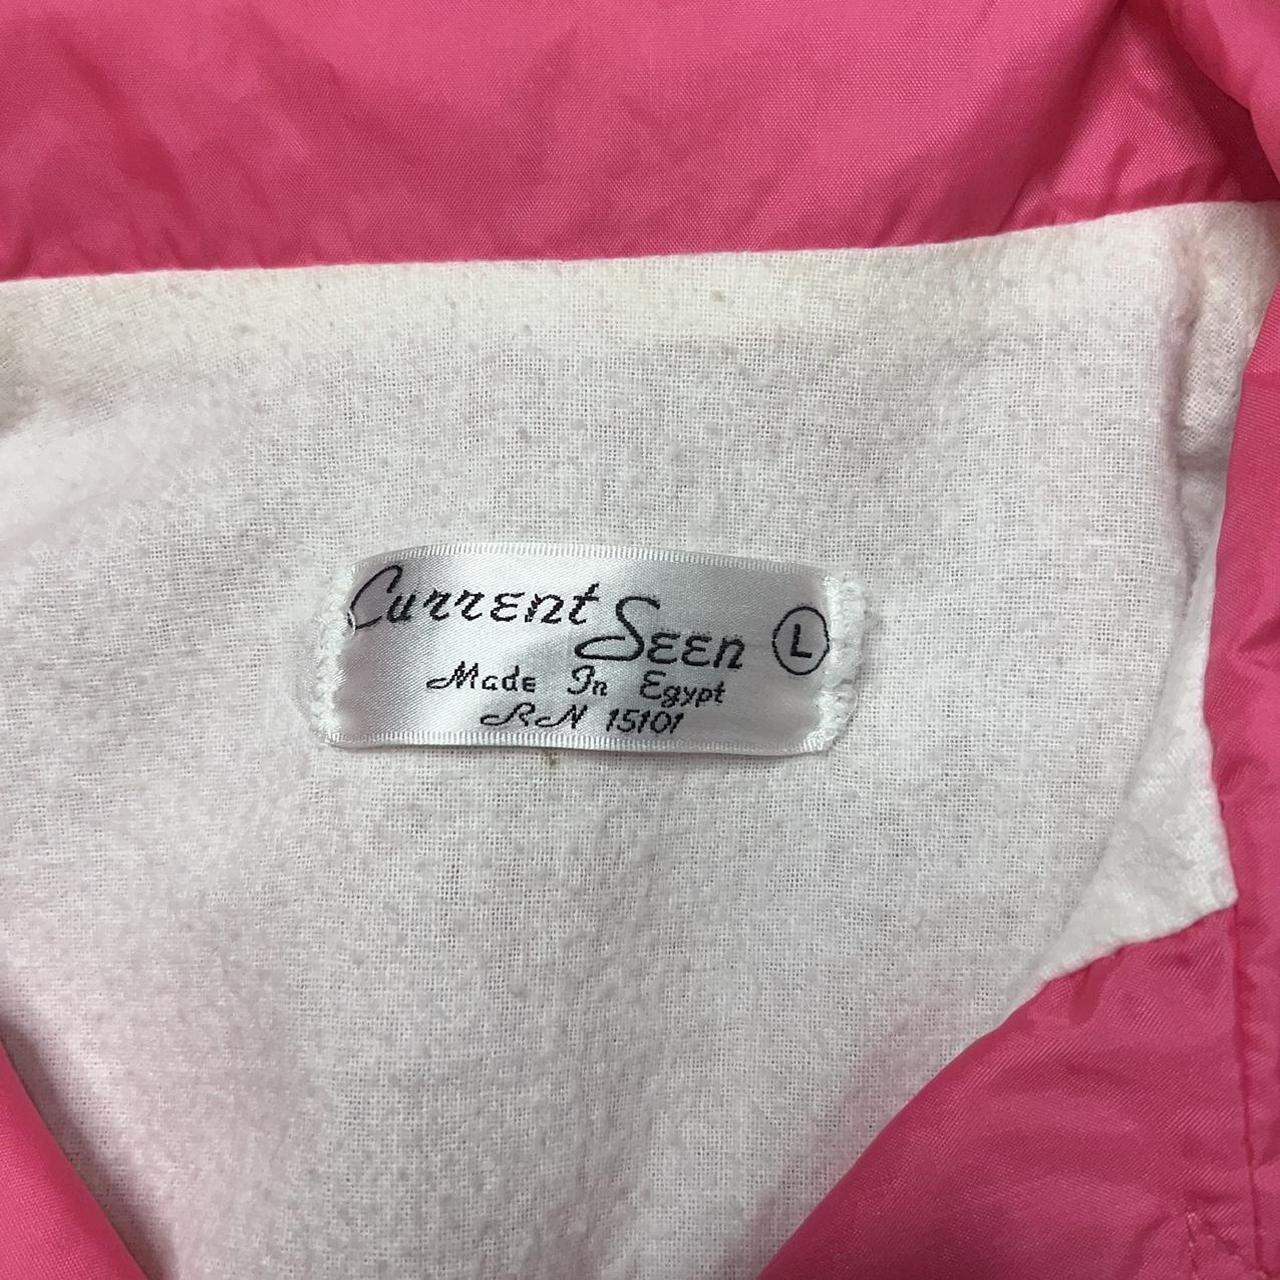 Current Seen Women's Pink Jacket (4)